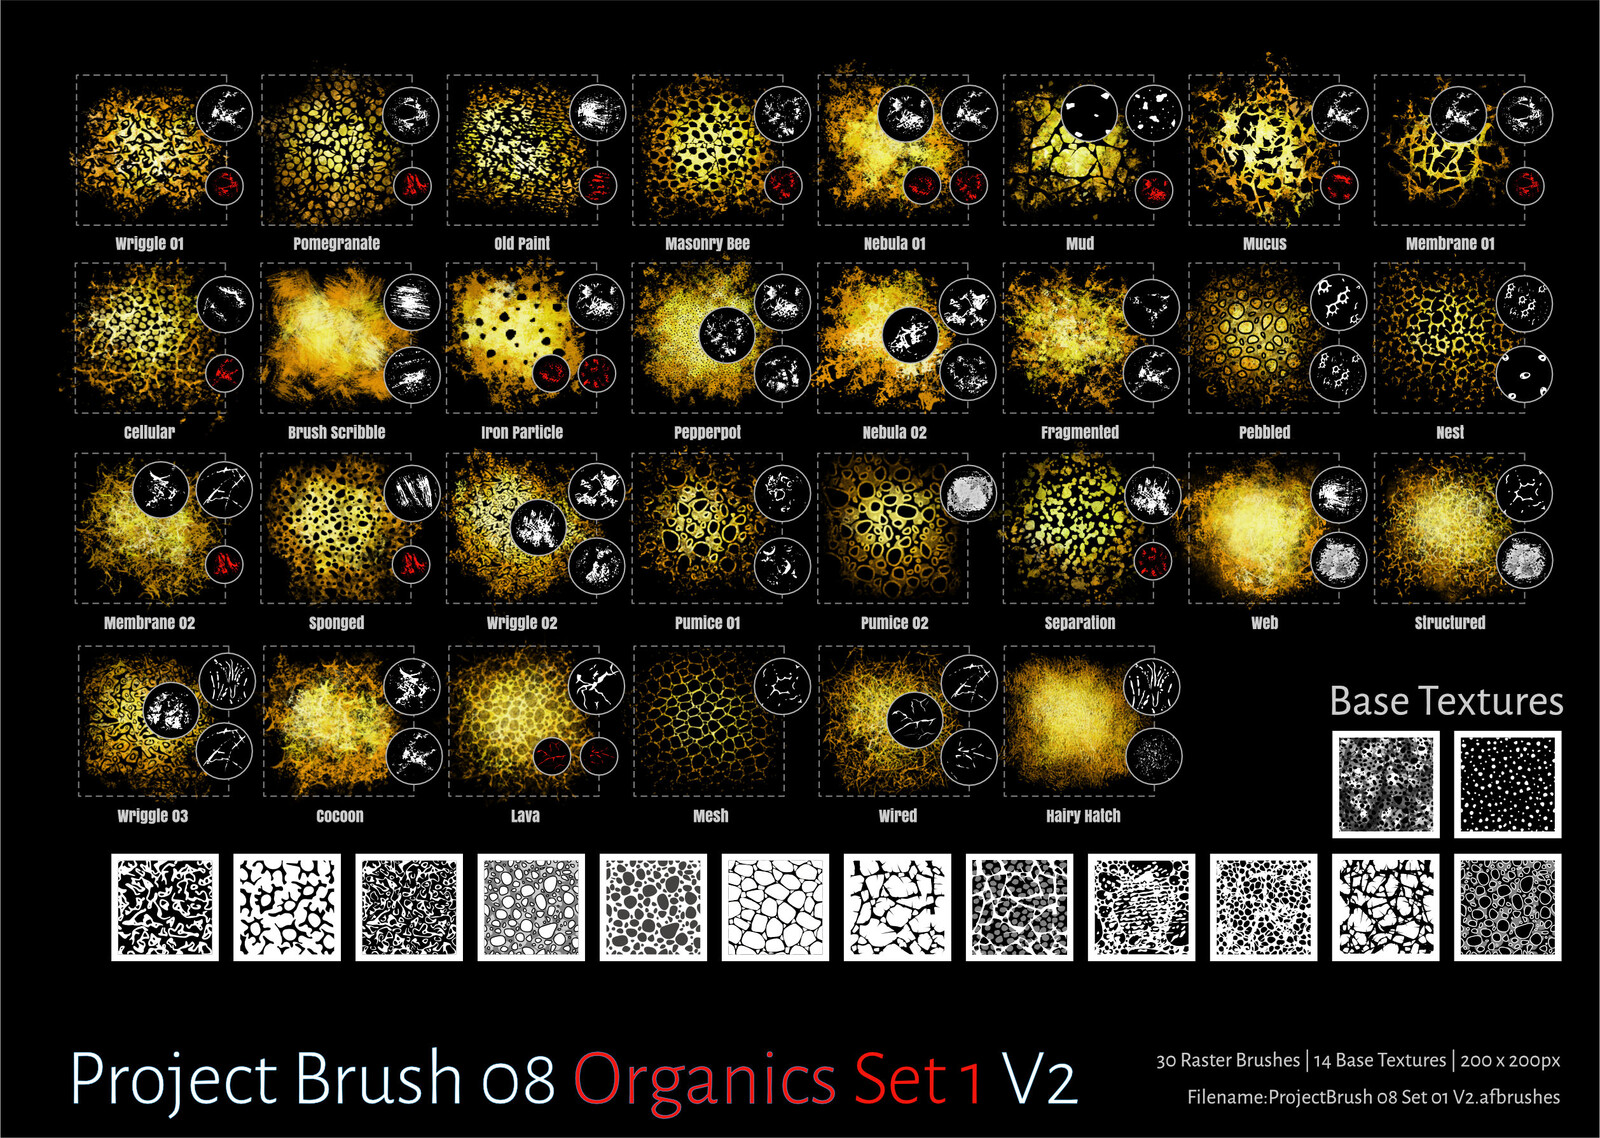 Project Brush 08 Organics Set 01
30 Raster brushes